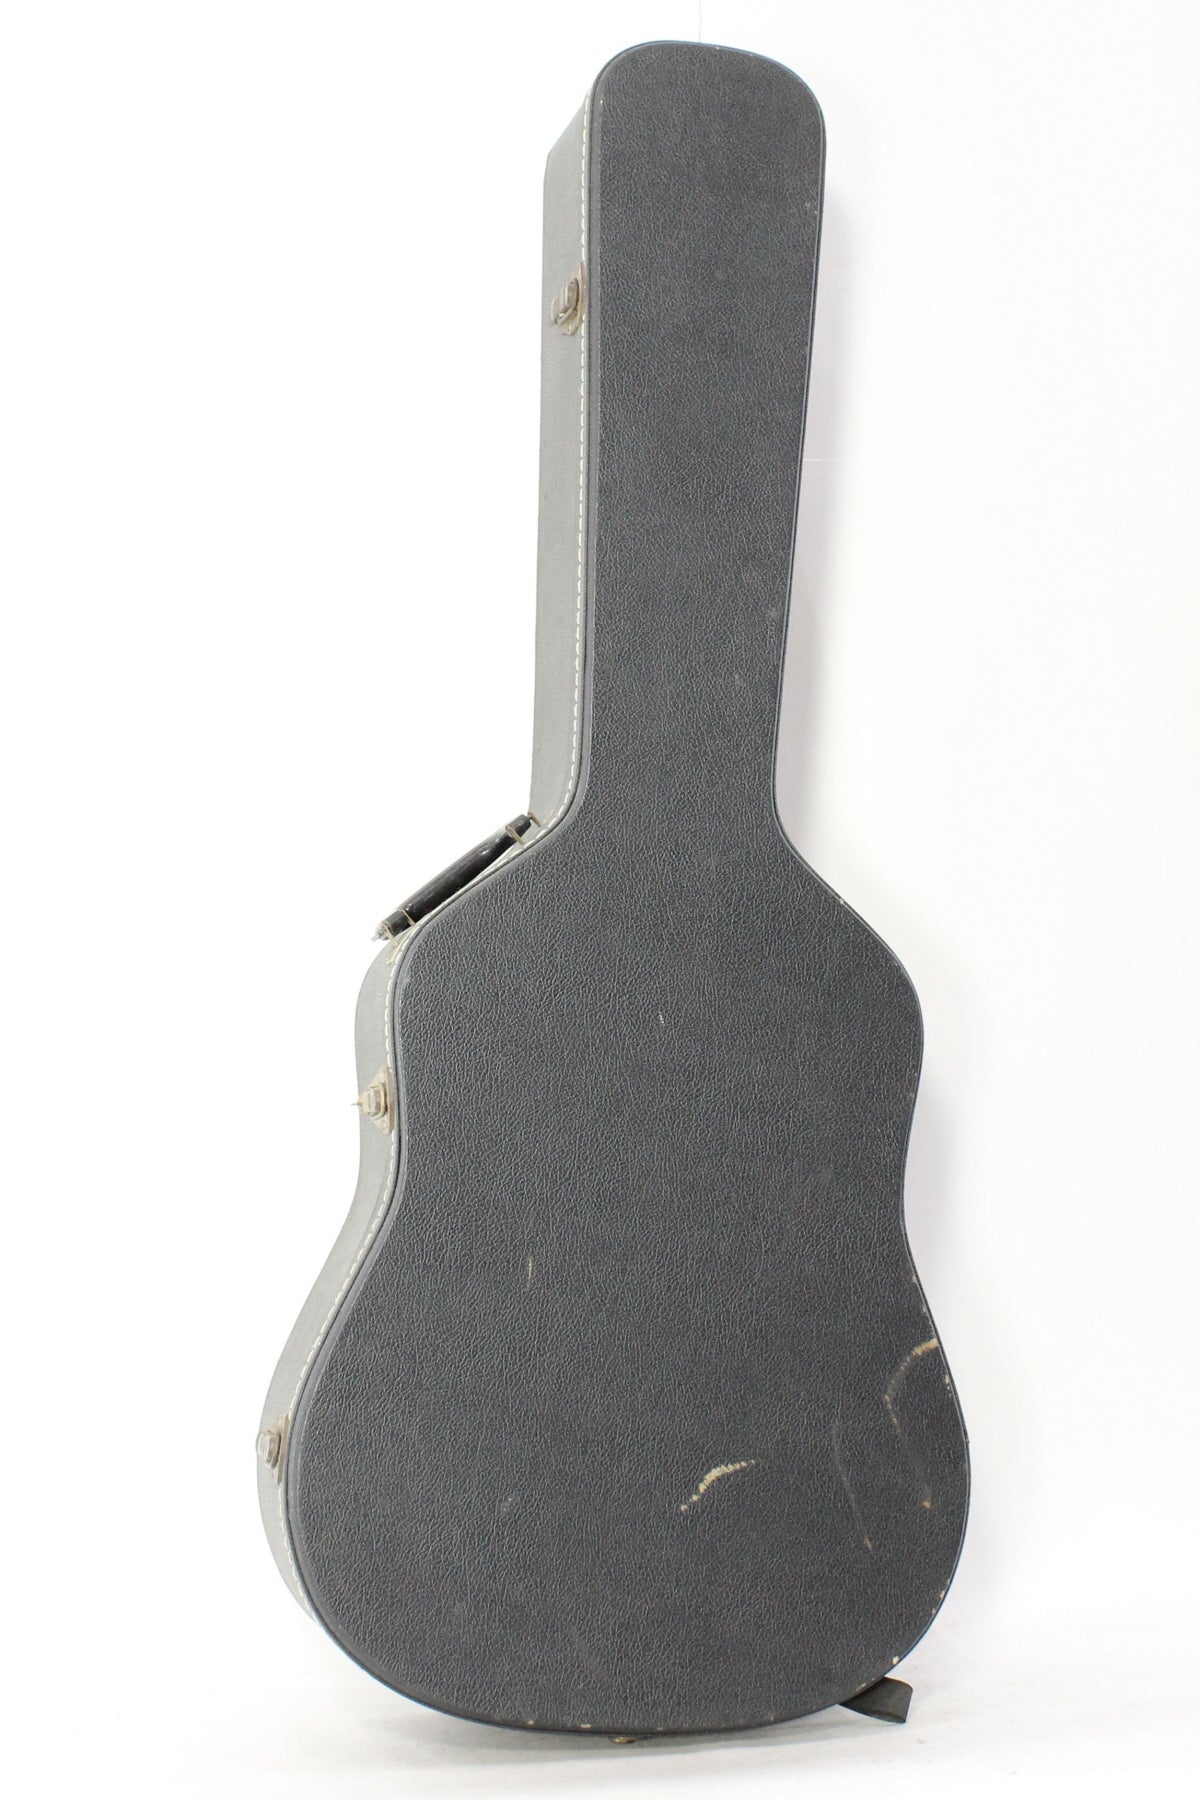 [SN 612466] USED Gibson / 1974-1975 Hummingbird Custom Cherry Sunburst Gibson Acoustic Guitar [08]